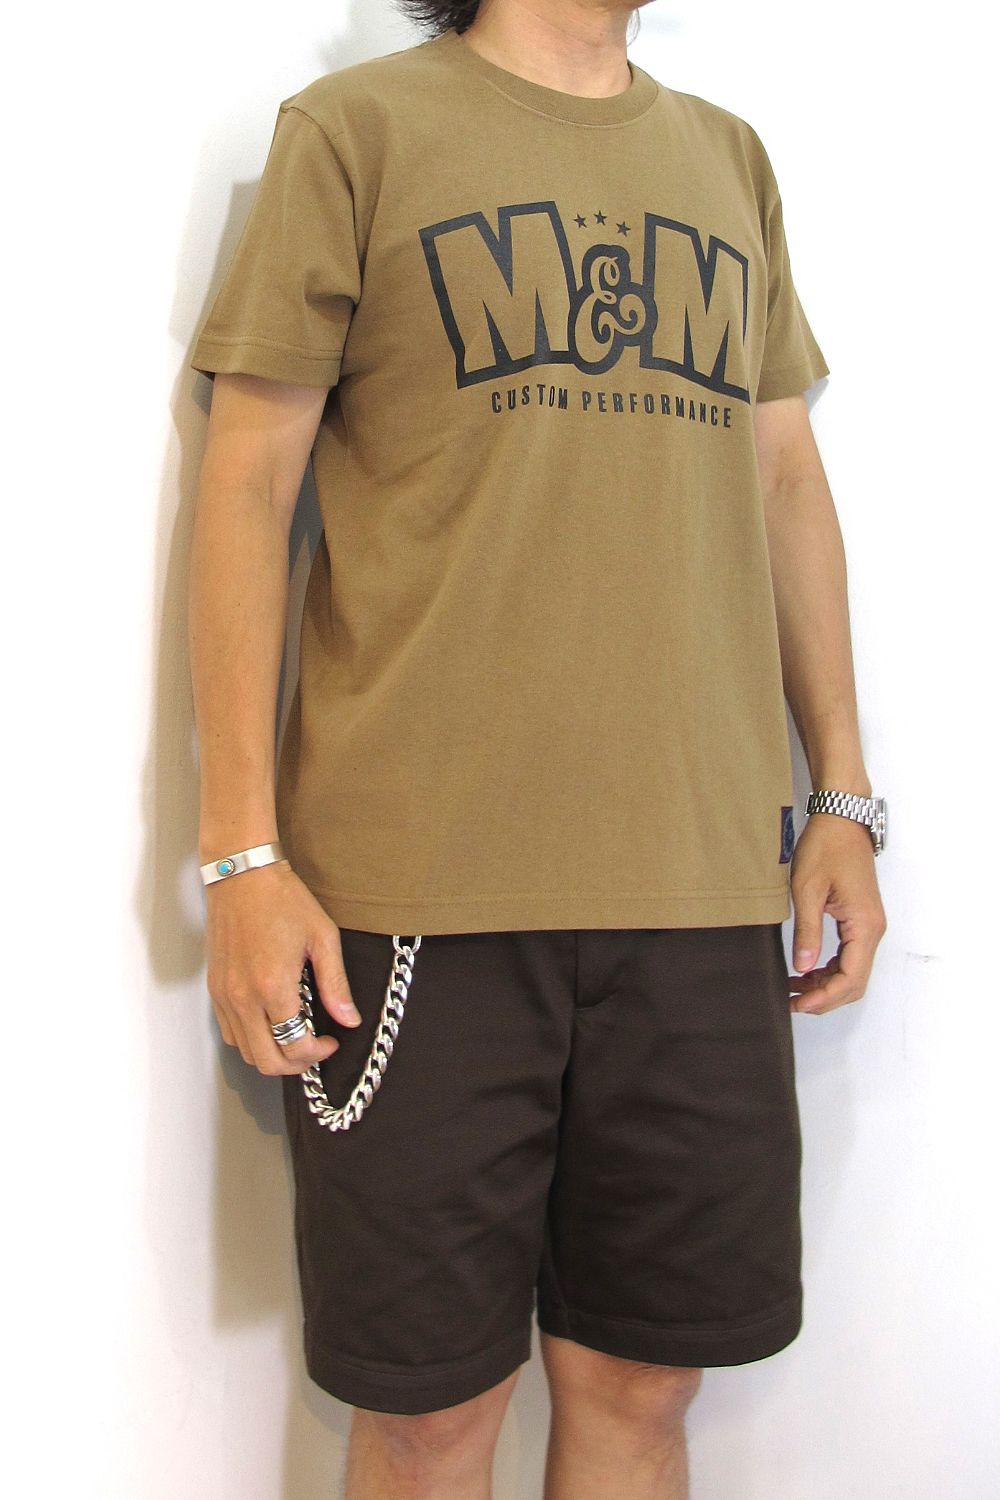 M&M CUSTOM PERFORMANCE Tシャツ キャメルM